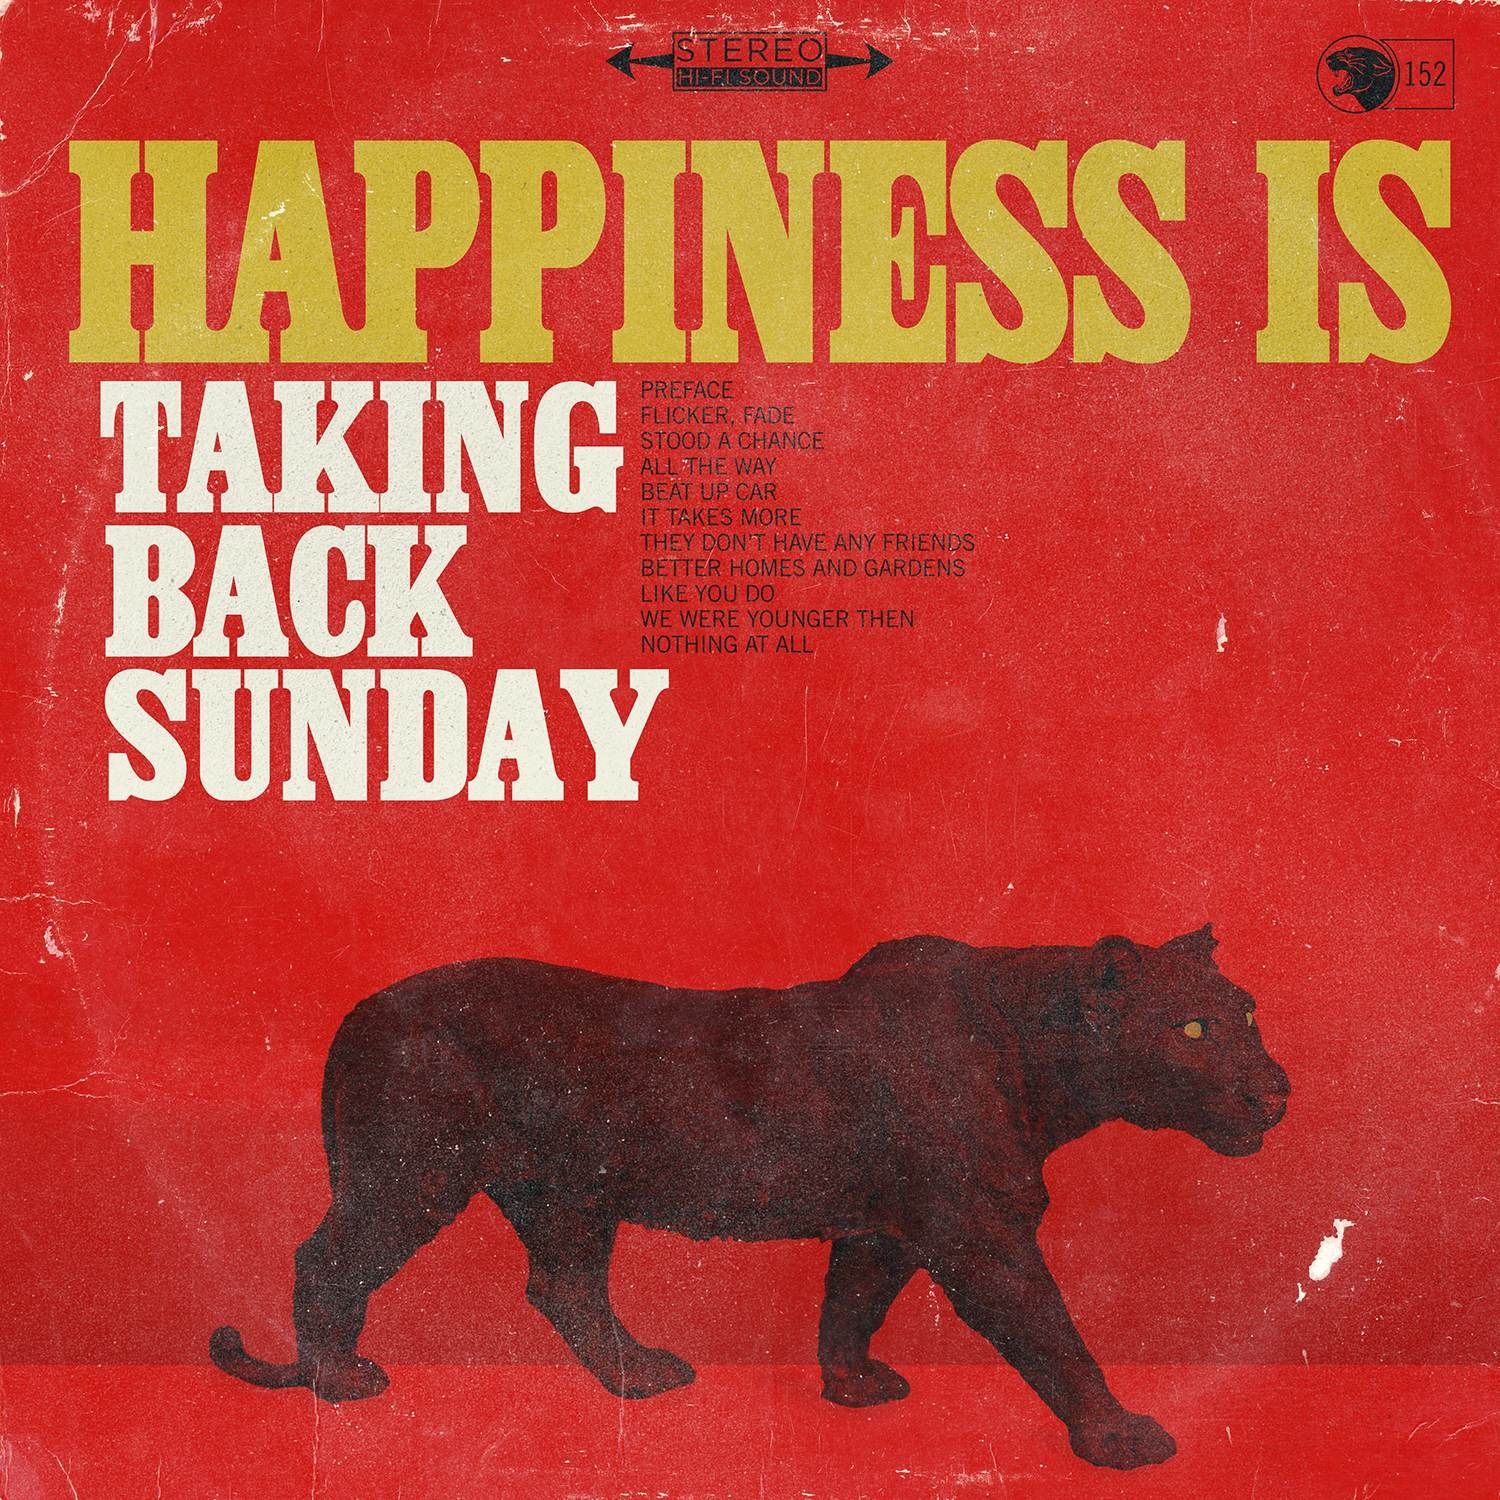 Imagem do álbum Happiness Is do(a) artista Taking Back Sunday